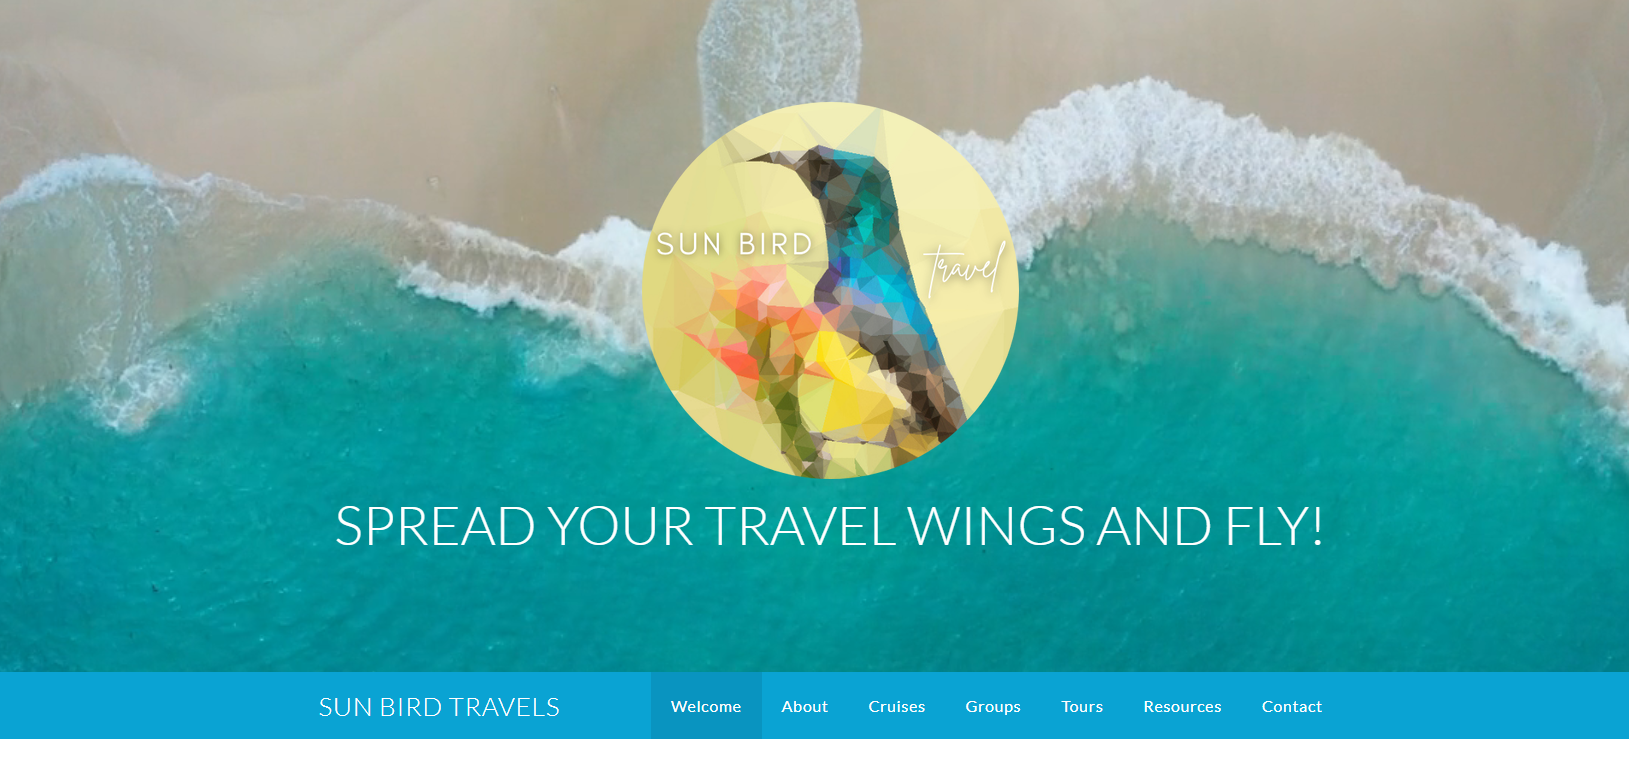 sunbird travels homepage image